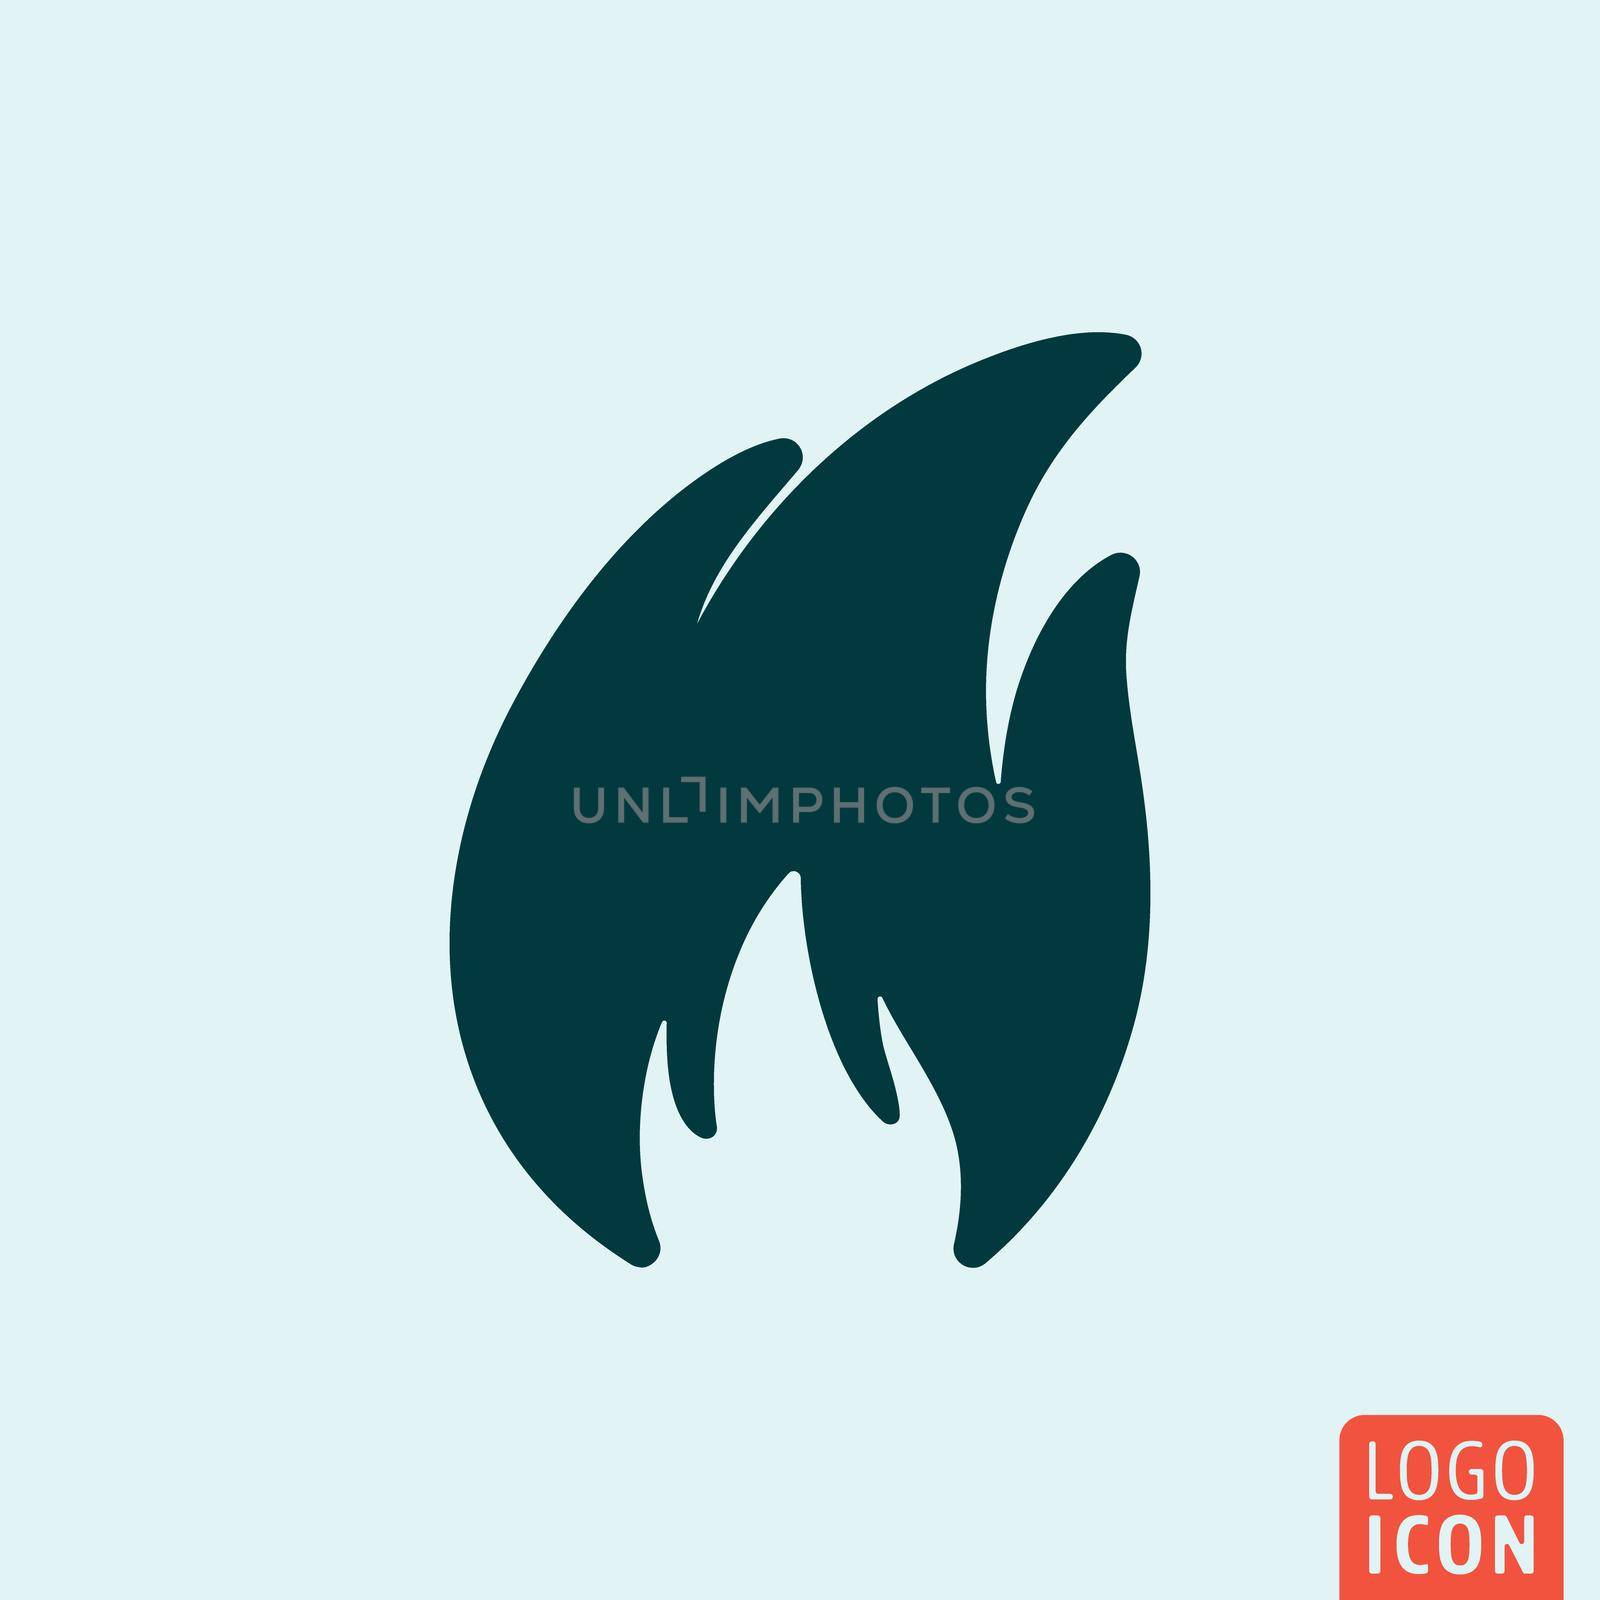 Fire icon design by Bobnevv